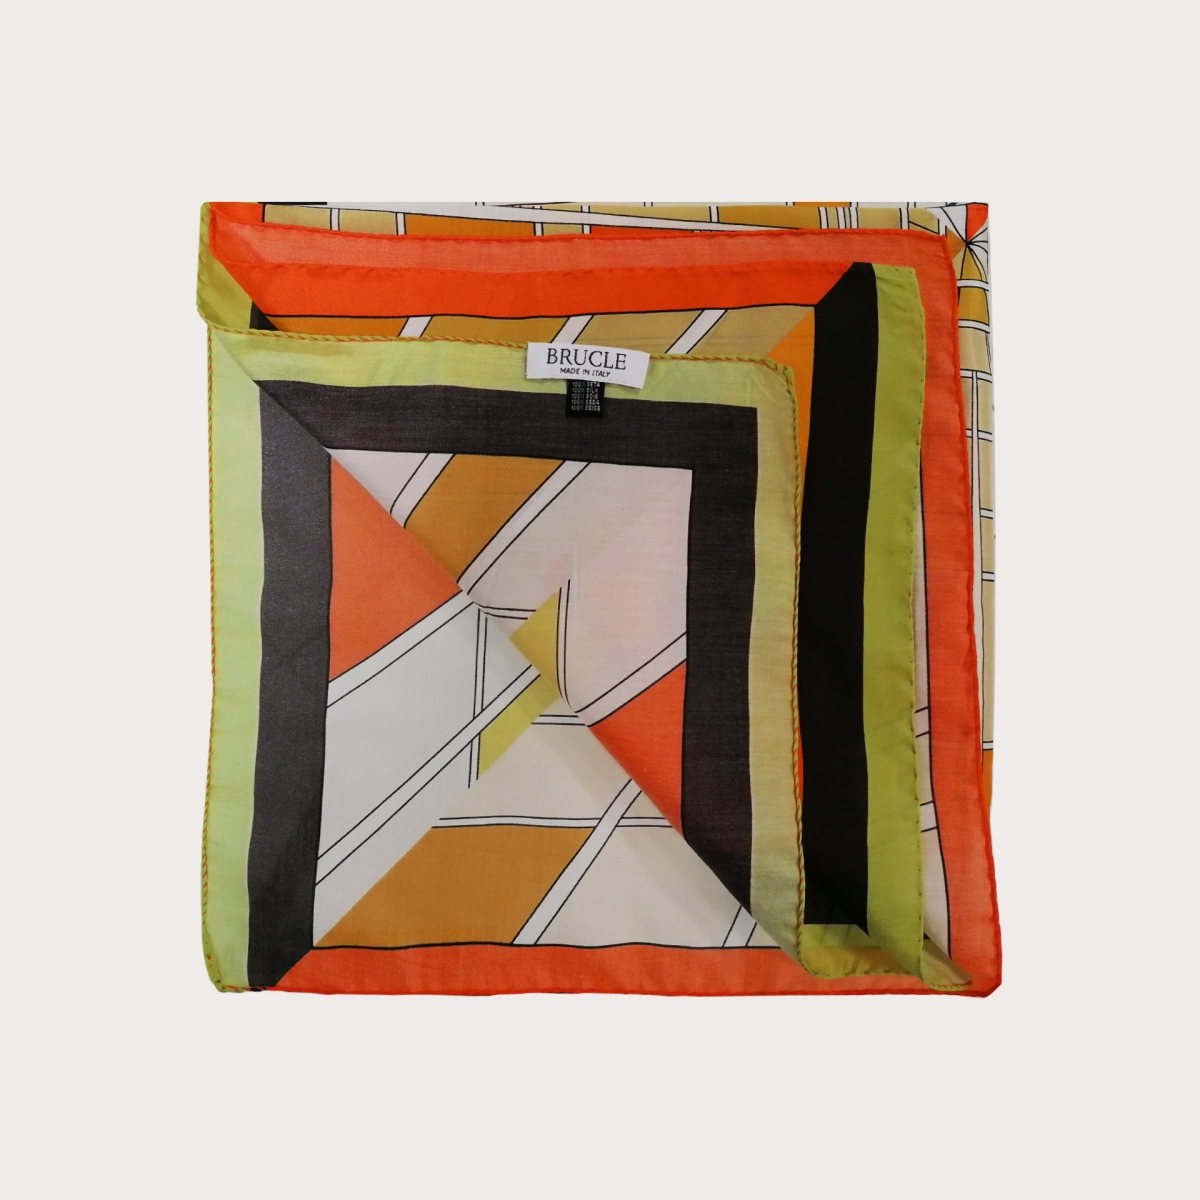 Foulard quadrato in seta, fantasia geometrica arancio